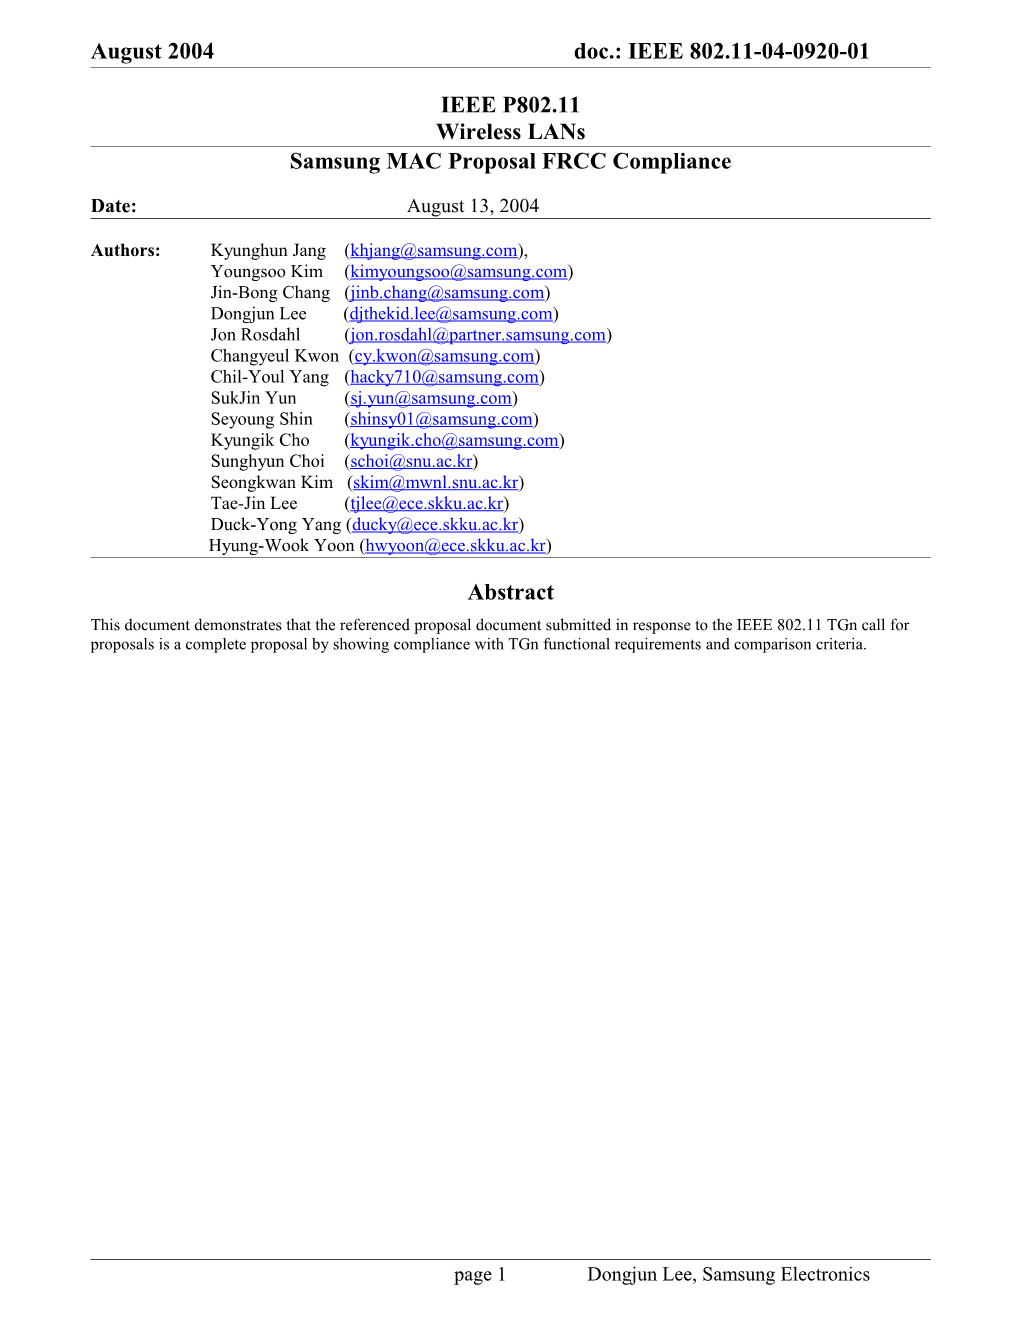 Samsung MAC Proposal FRCC Compliance